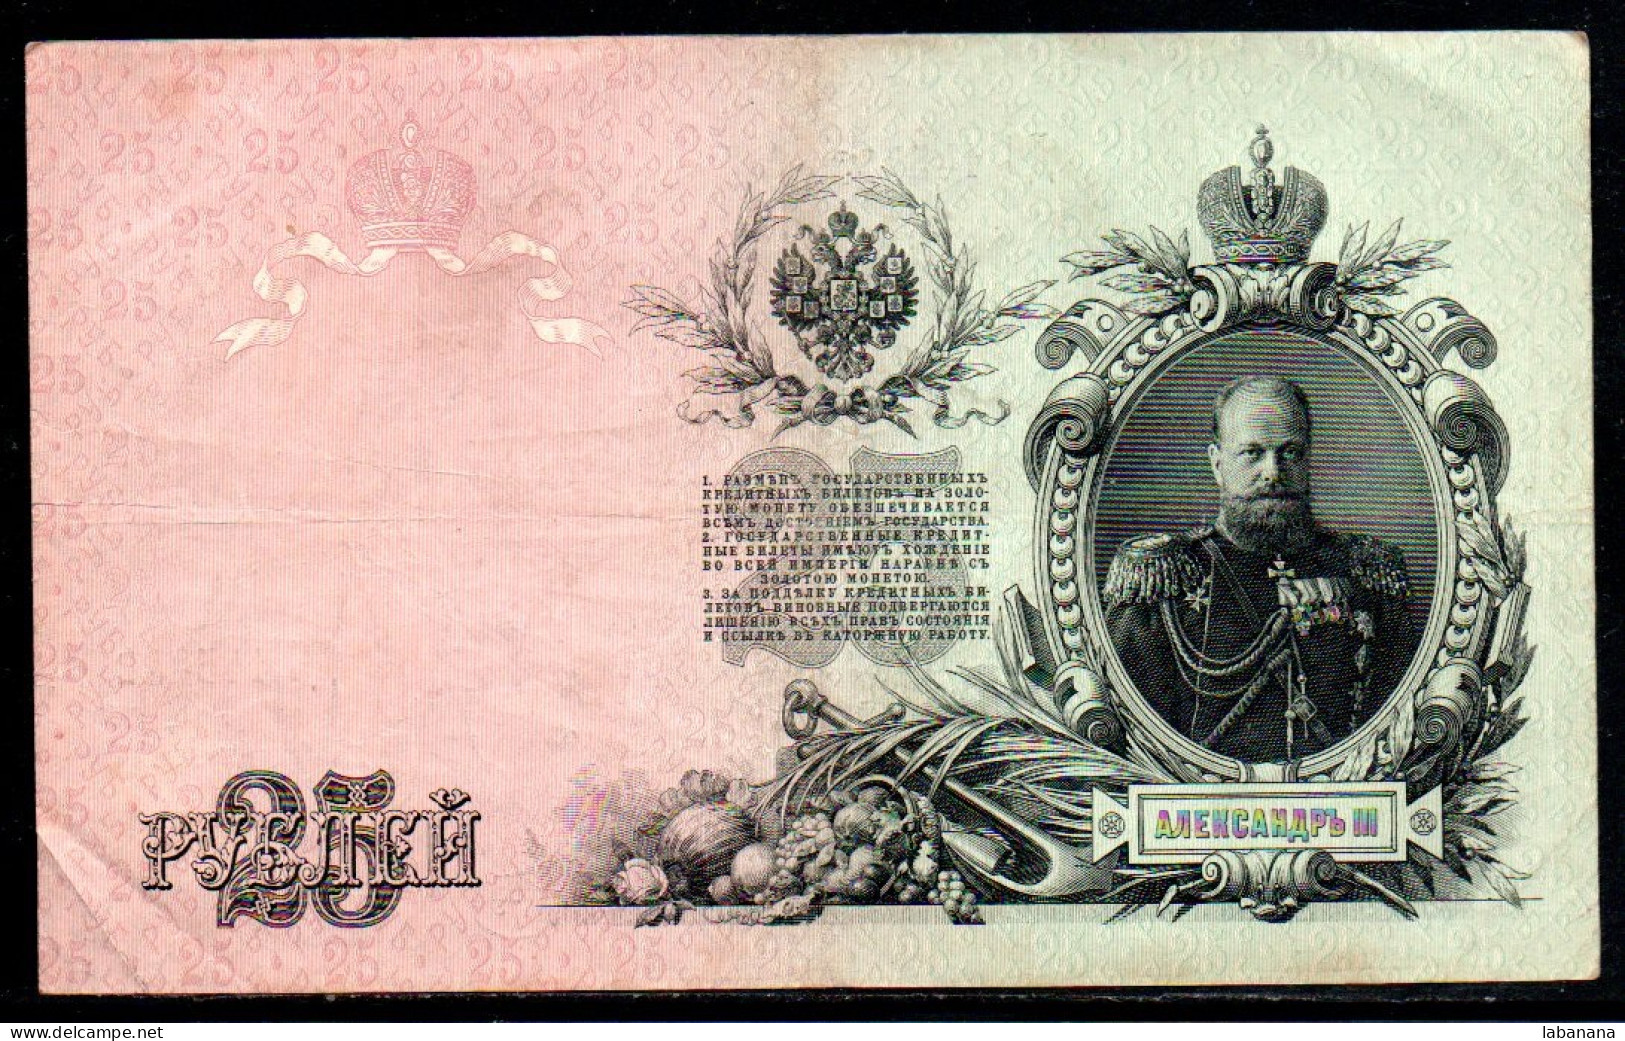 25-Russie 25 Roubles 1909 AC145 - Russie